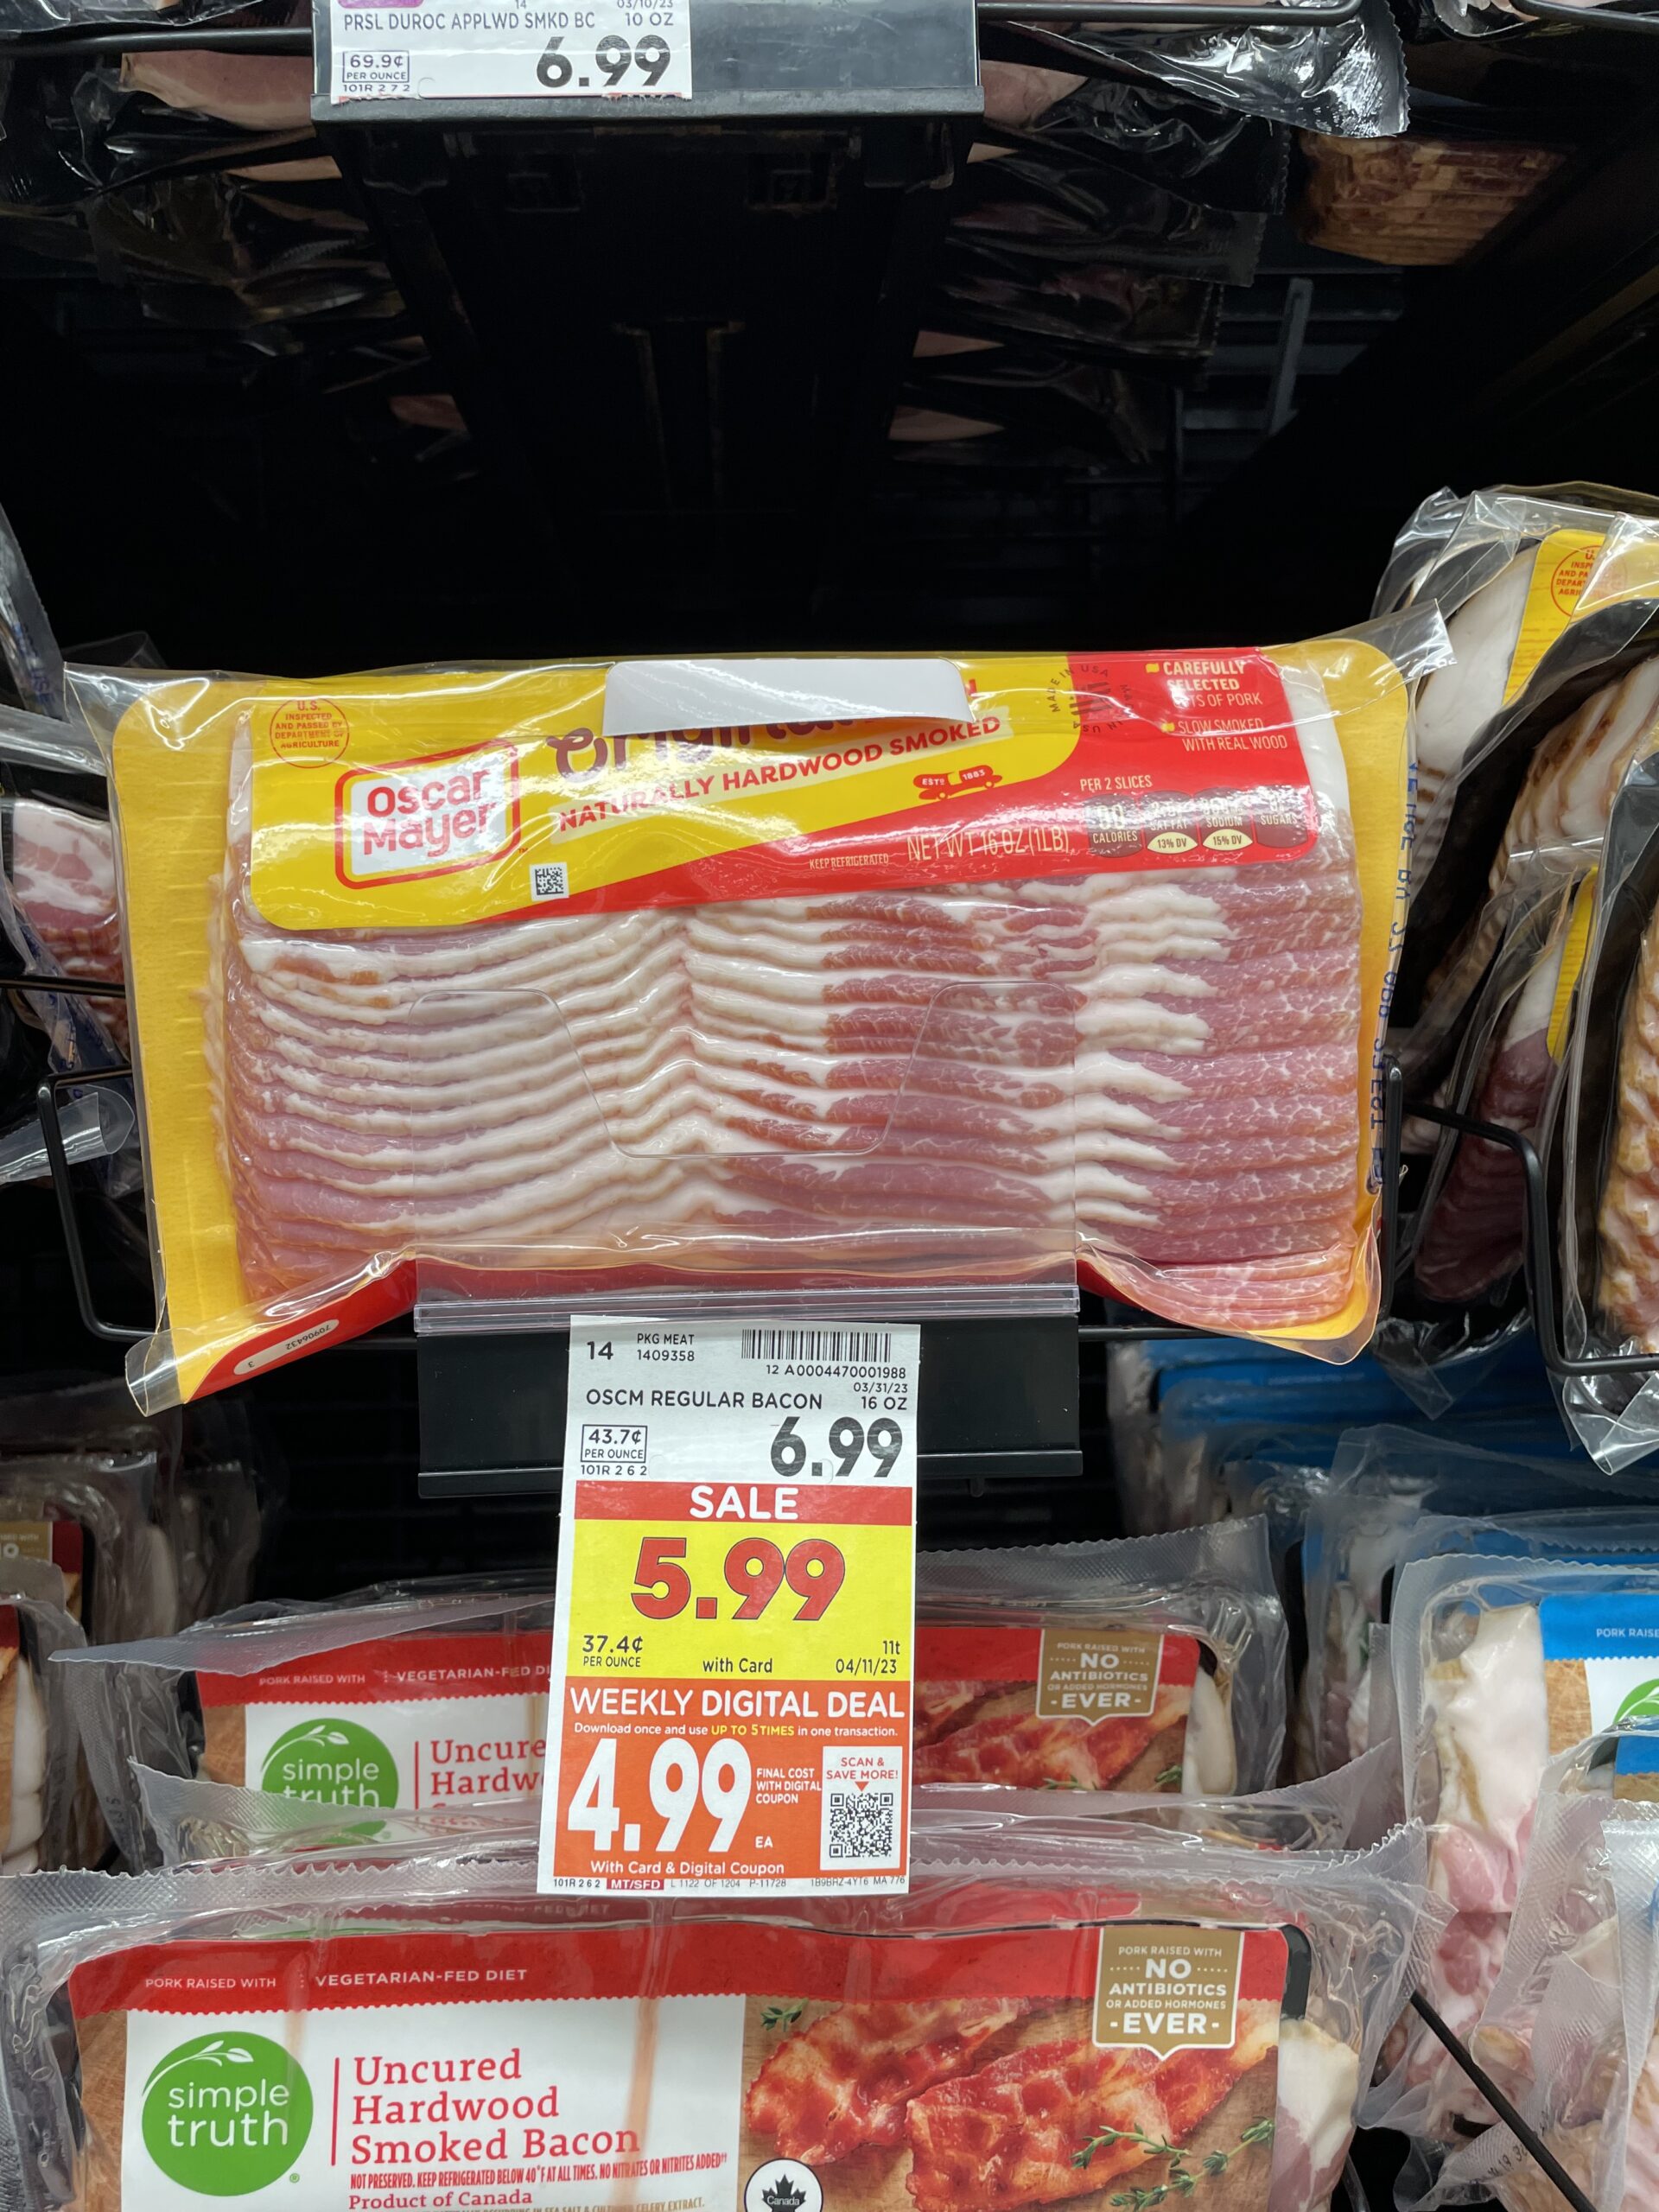 oscar mayer bacon kroger shelf image 2